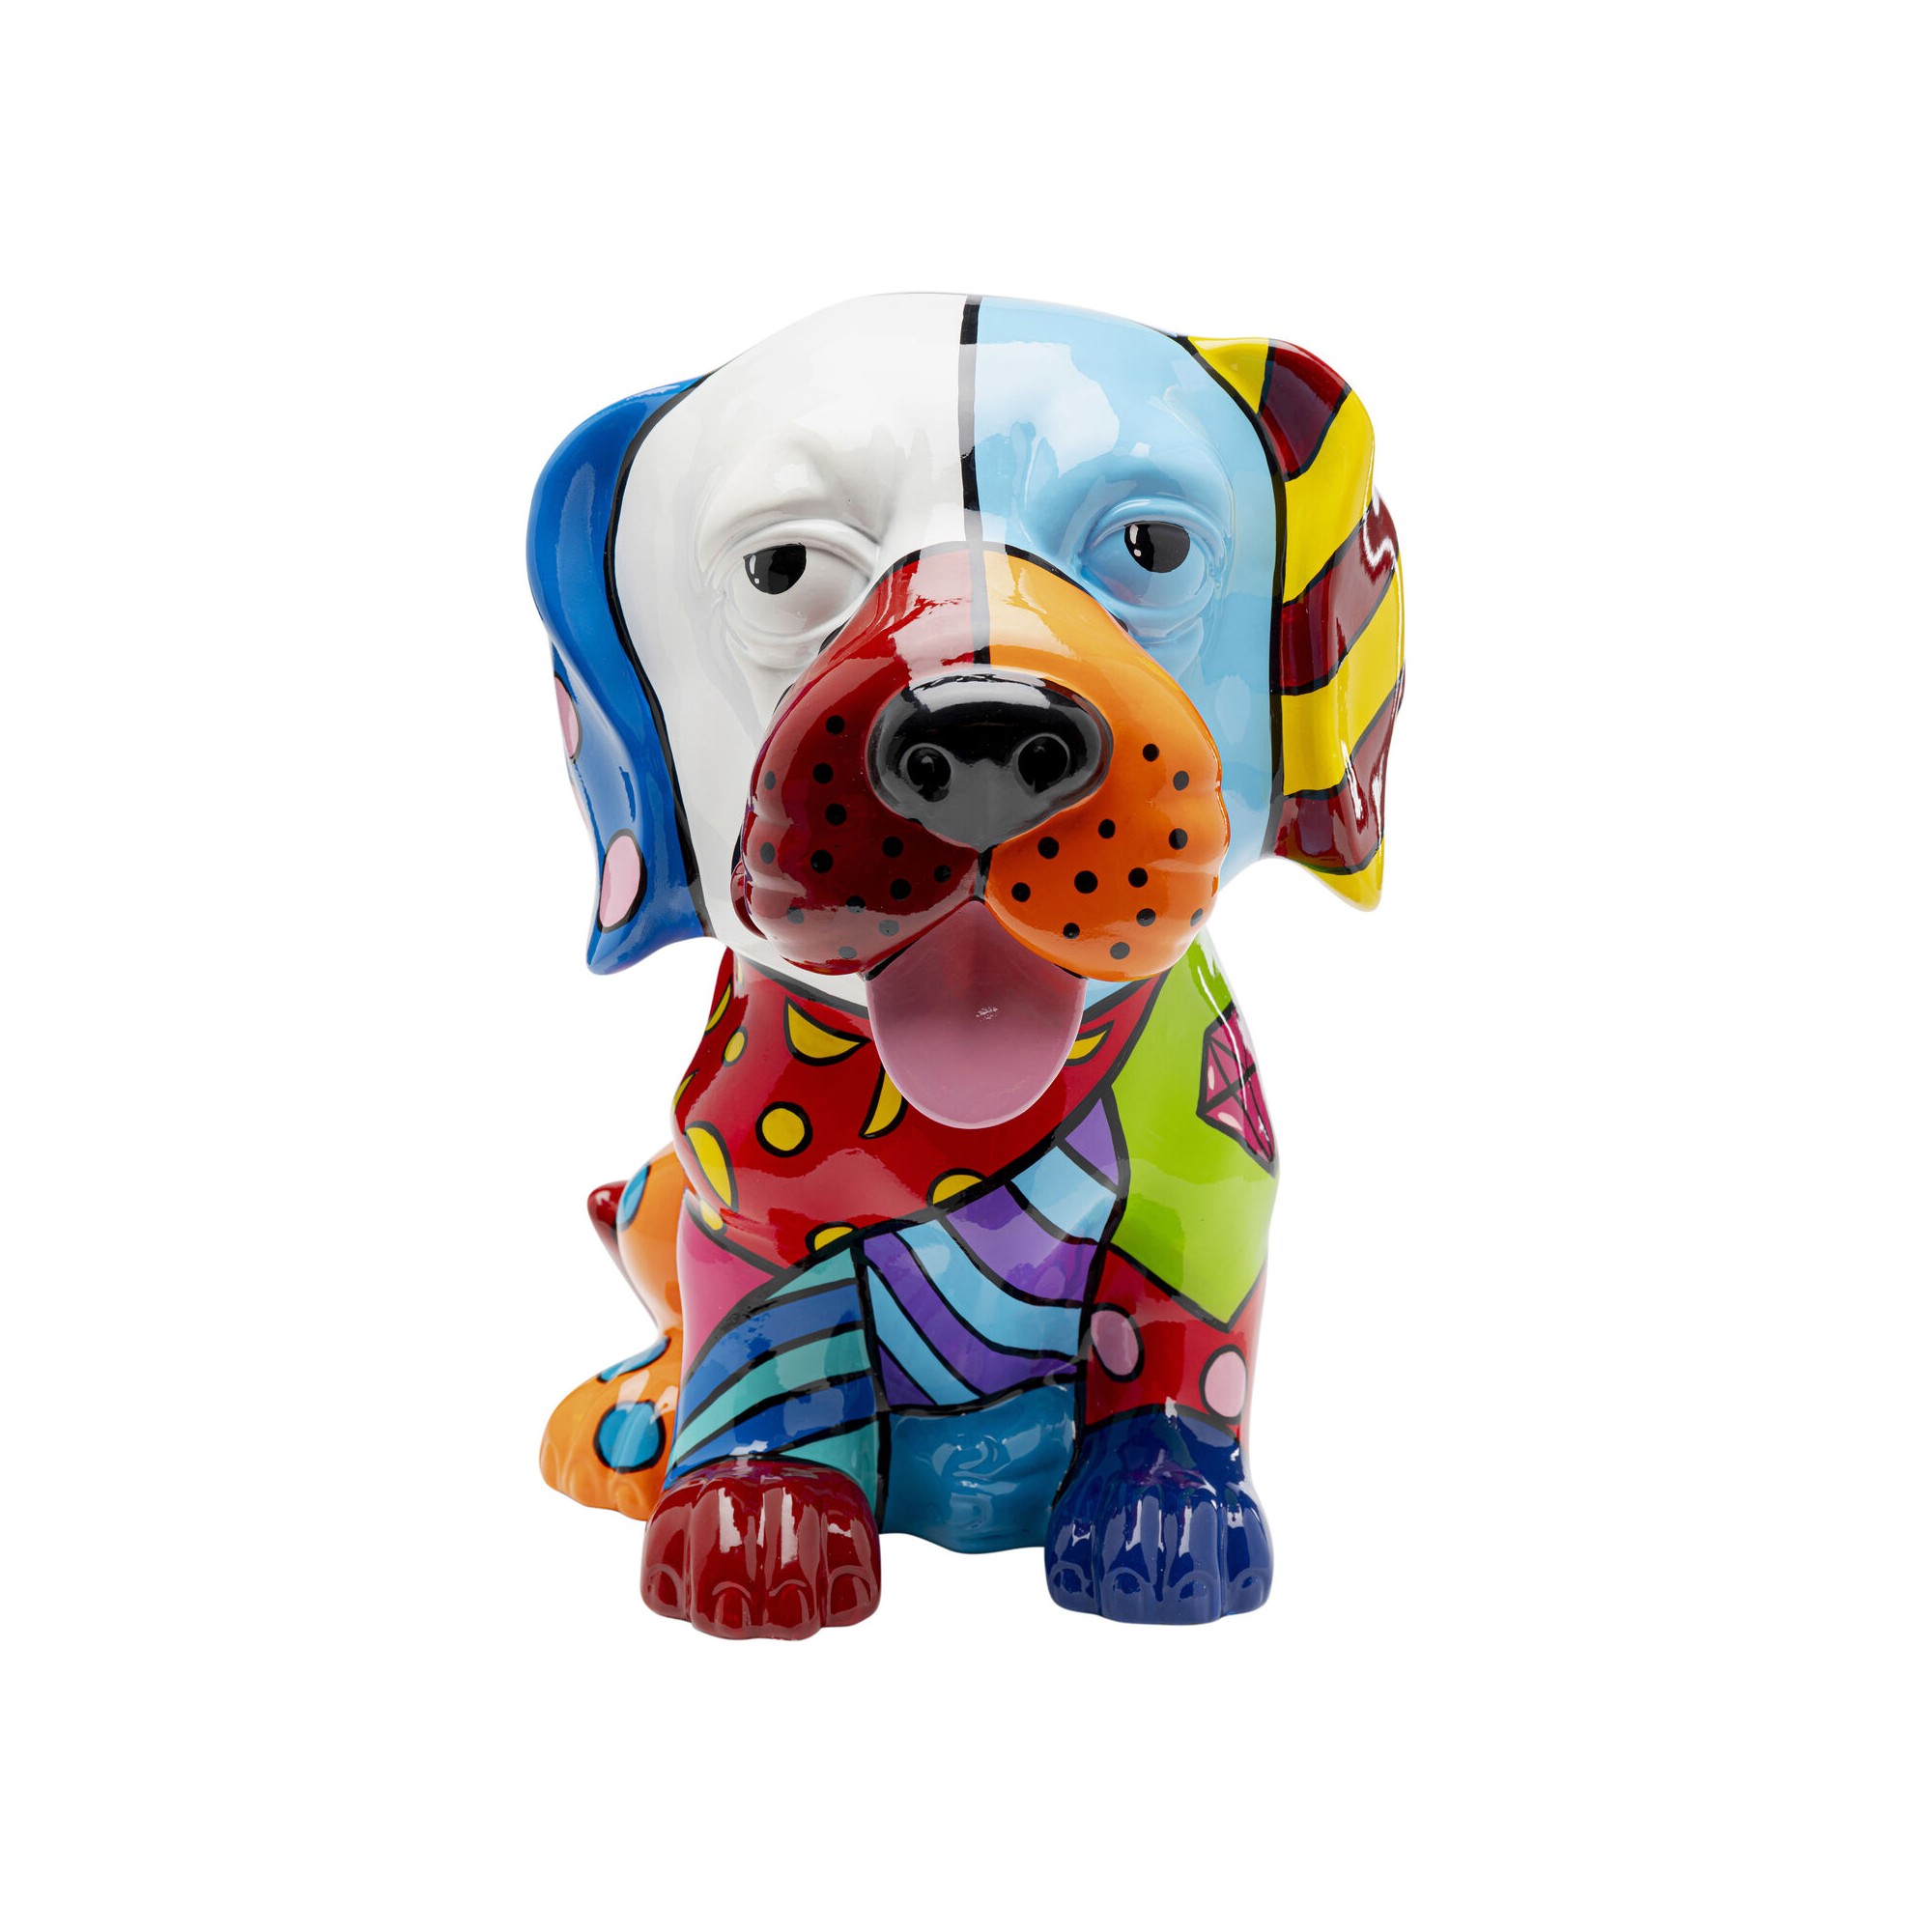 Figurine décorative Dog Patchwork 35cm